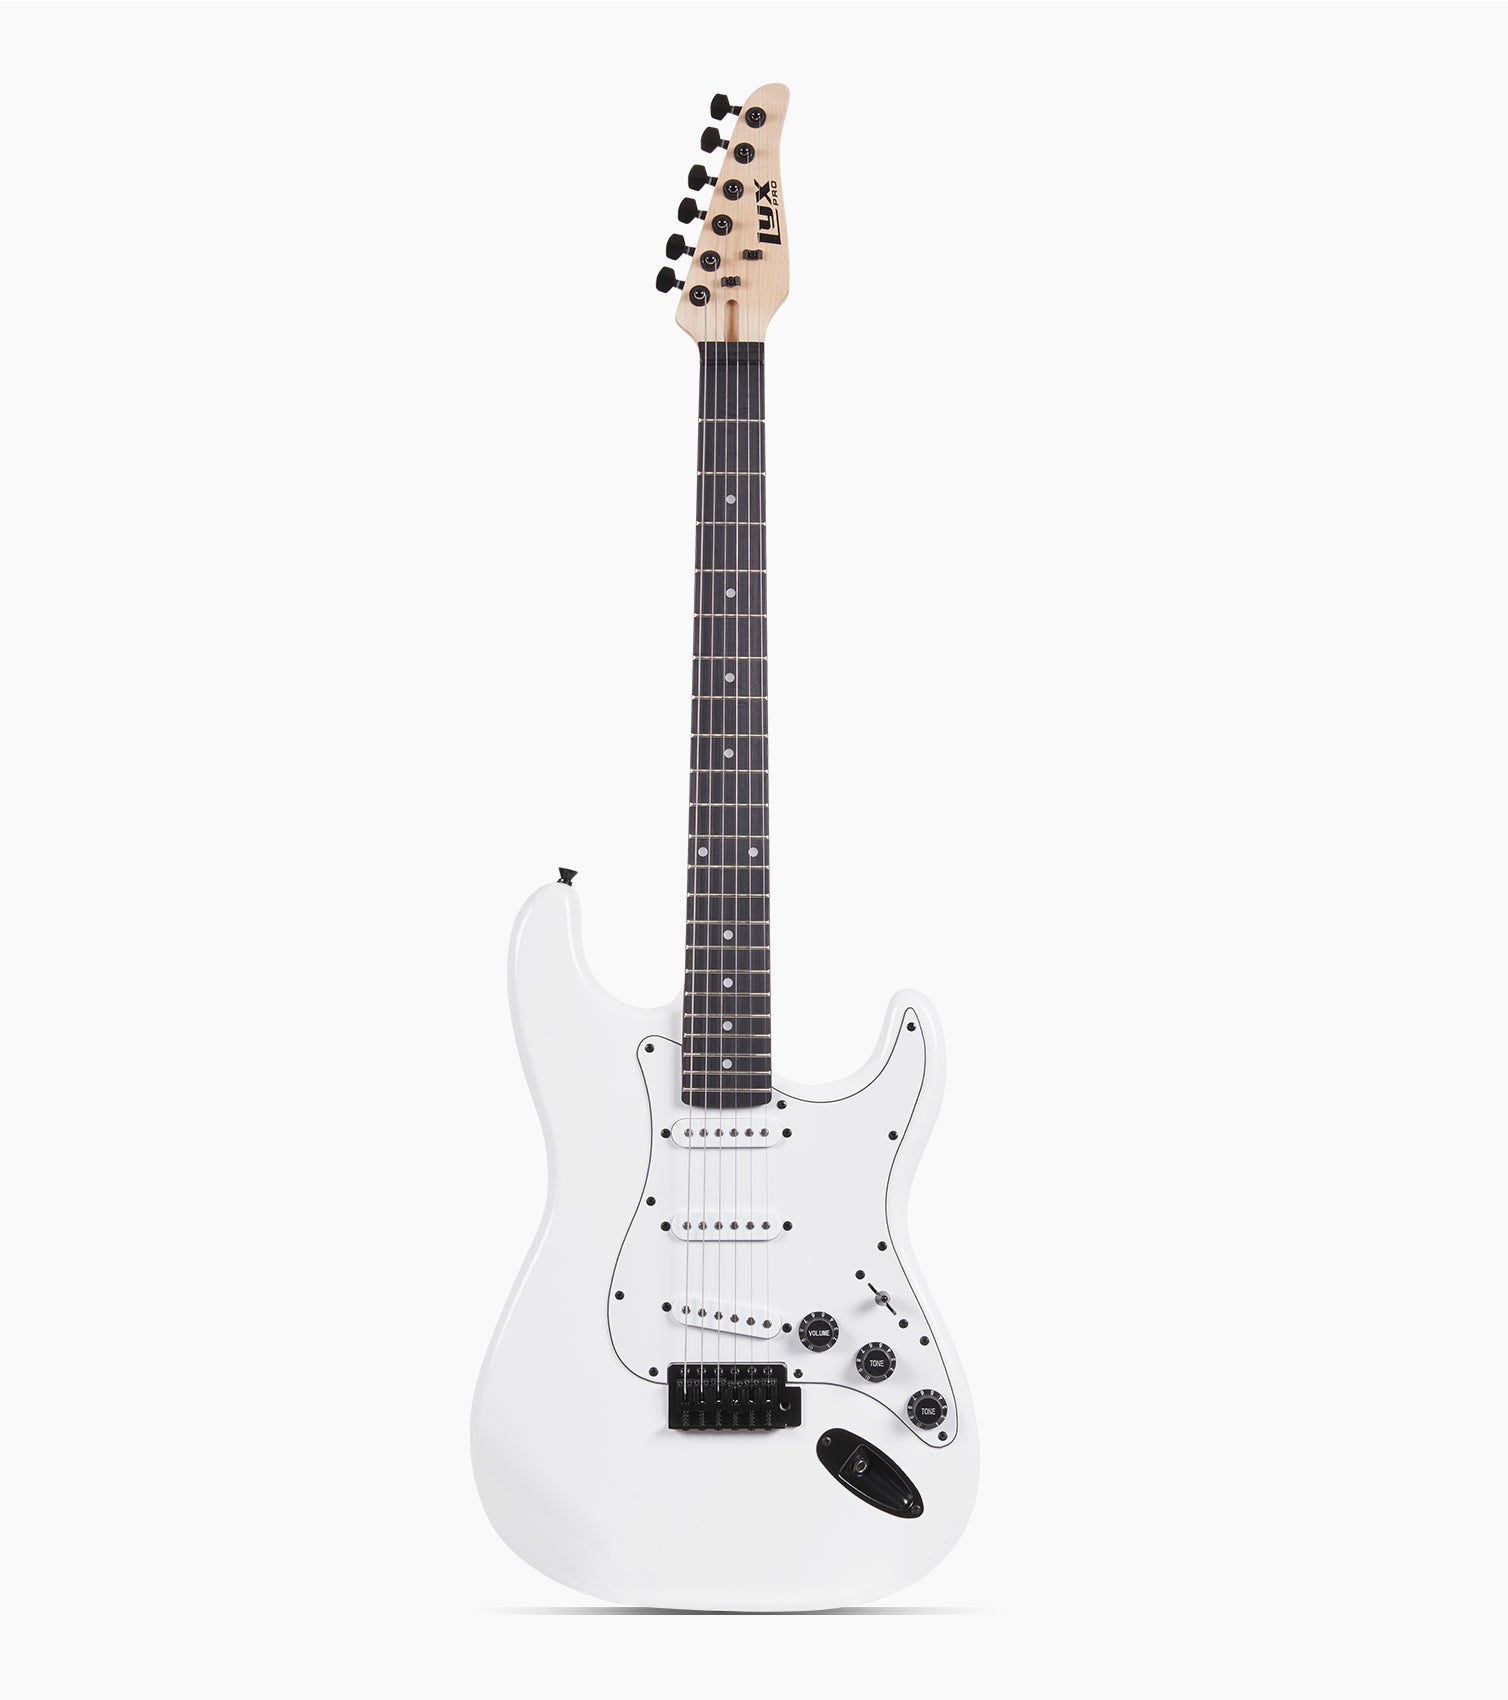 White double-cutaway beginner electric guitar